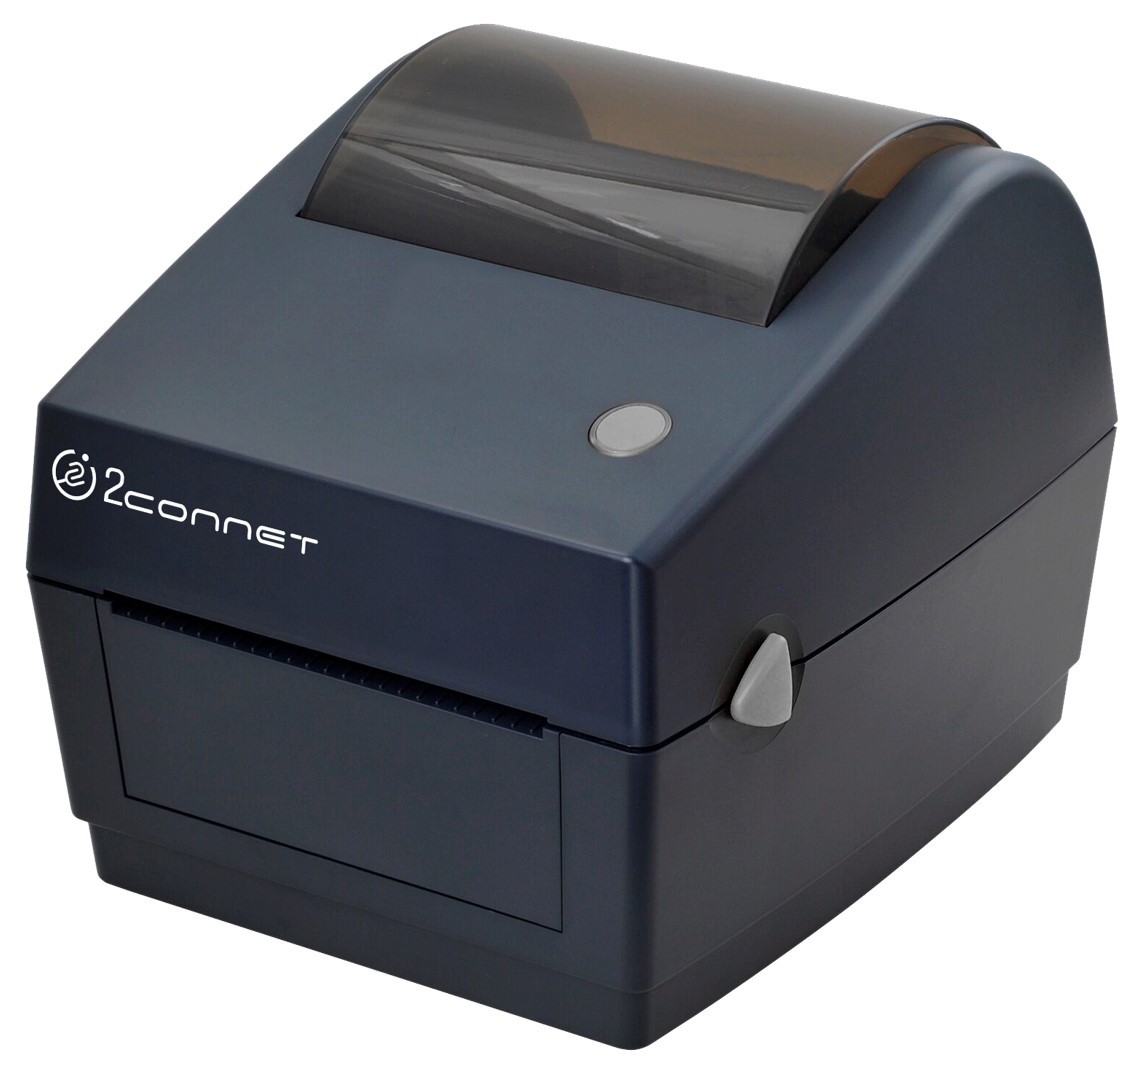 impresoras y scanners - Impresora Térmica de label etiquetas similar a la zebra 0